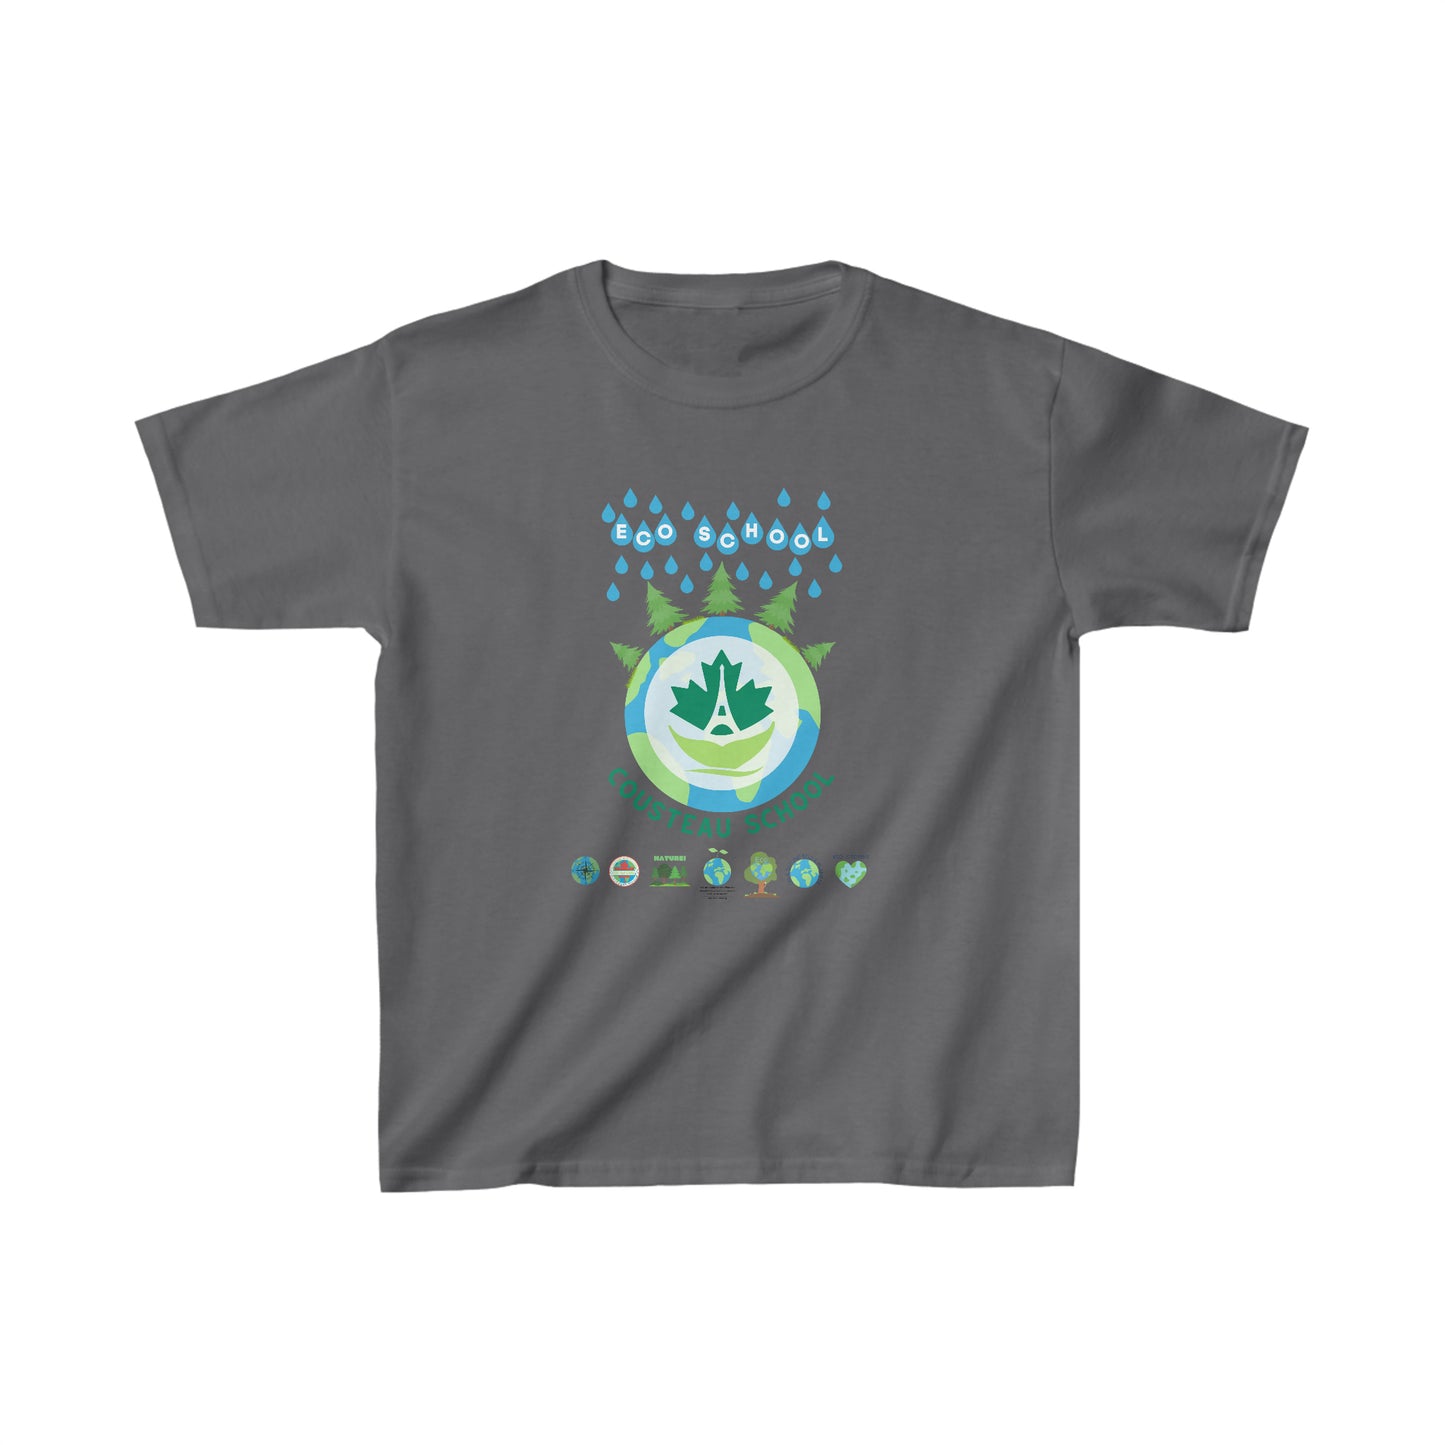 Eco-School T-shirt